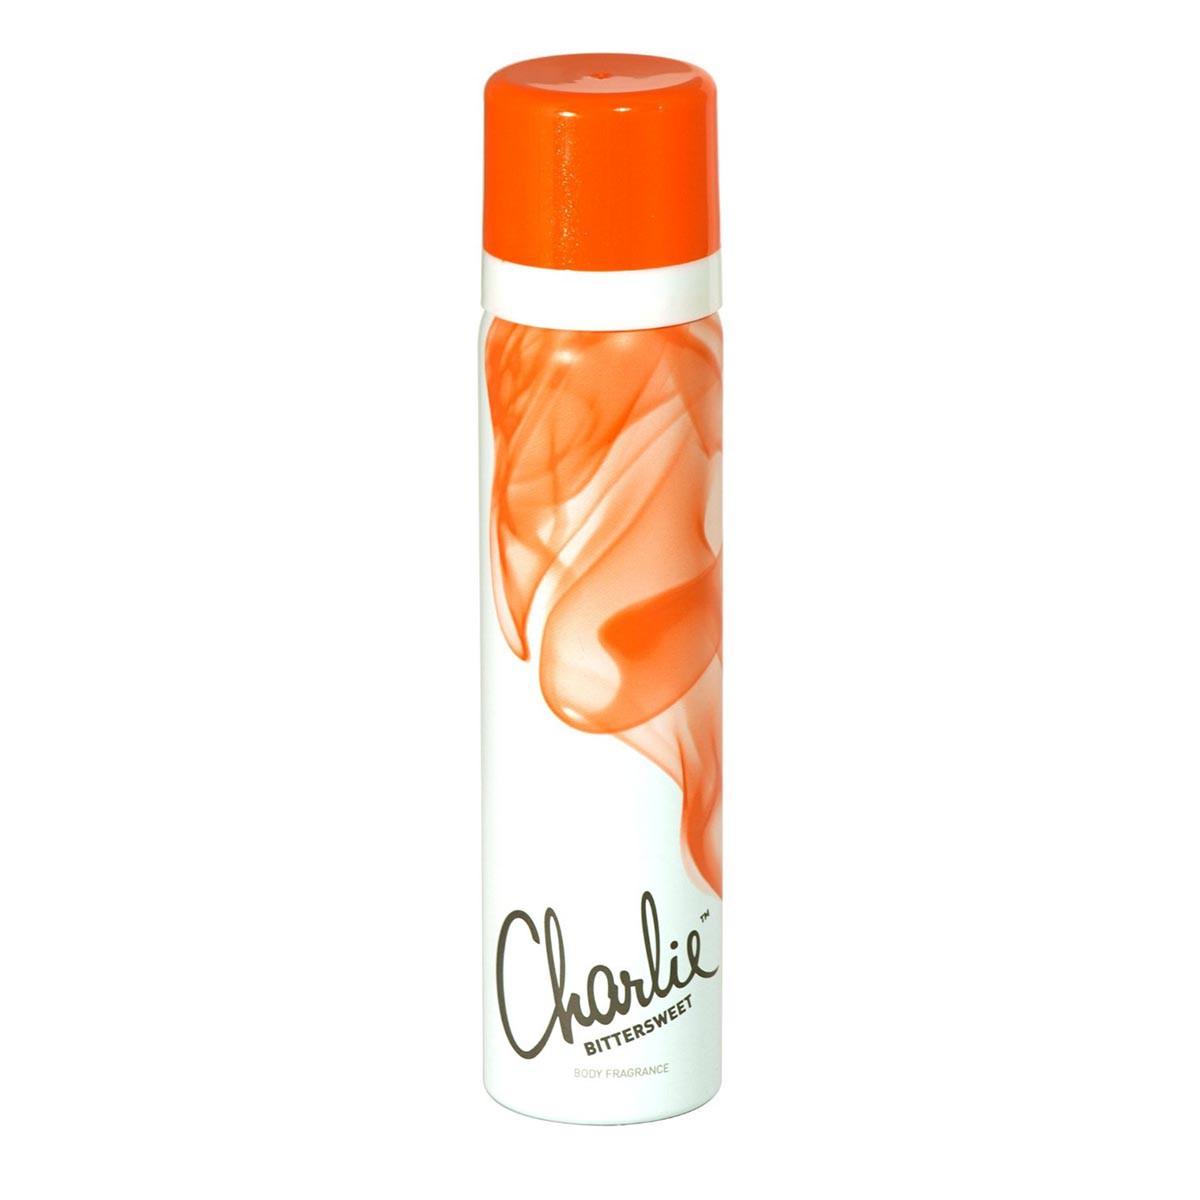 dyal-charlie-shimmer-perfumed-body-fragrance-75ml